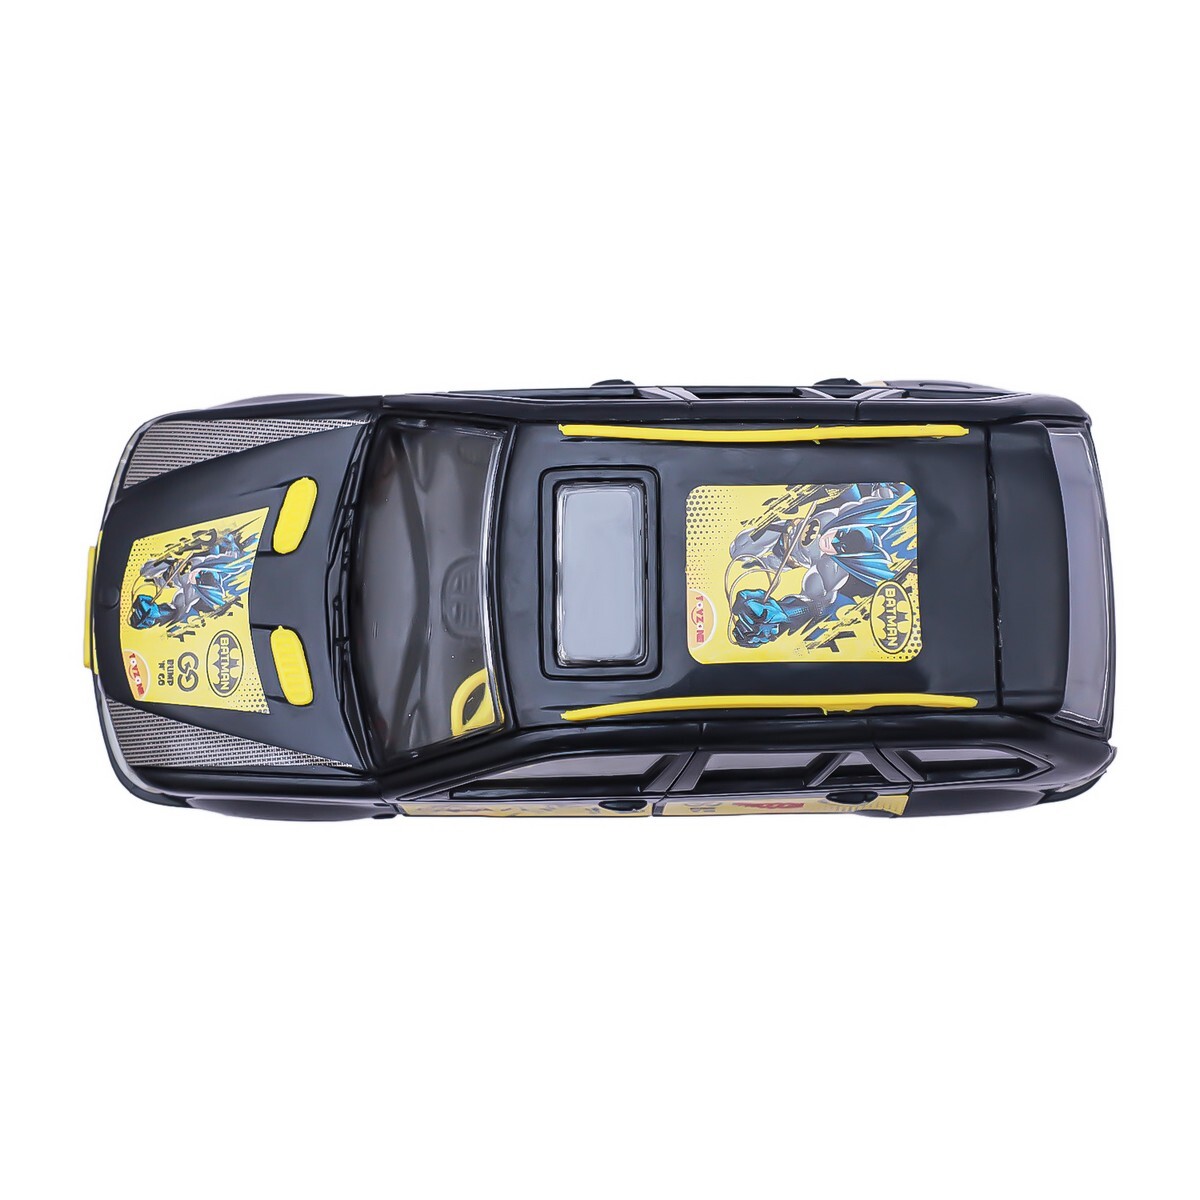 Toy Zone Batman Bump&Go Car-20691